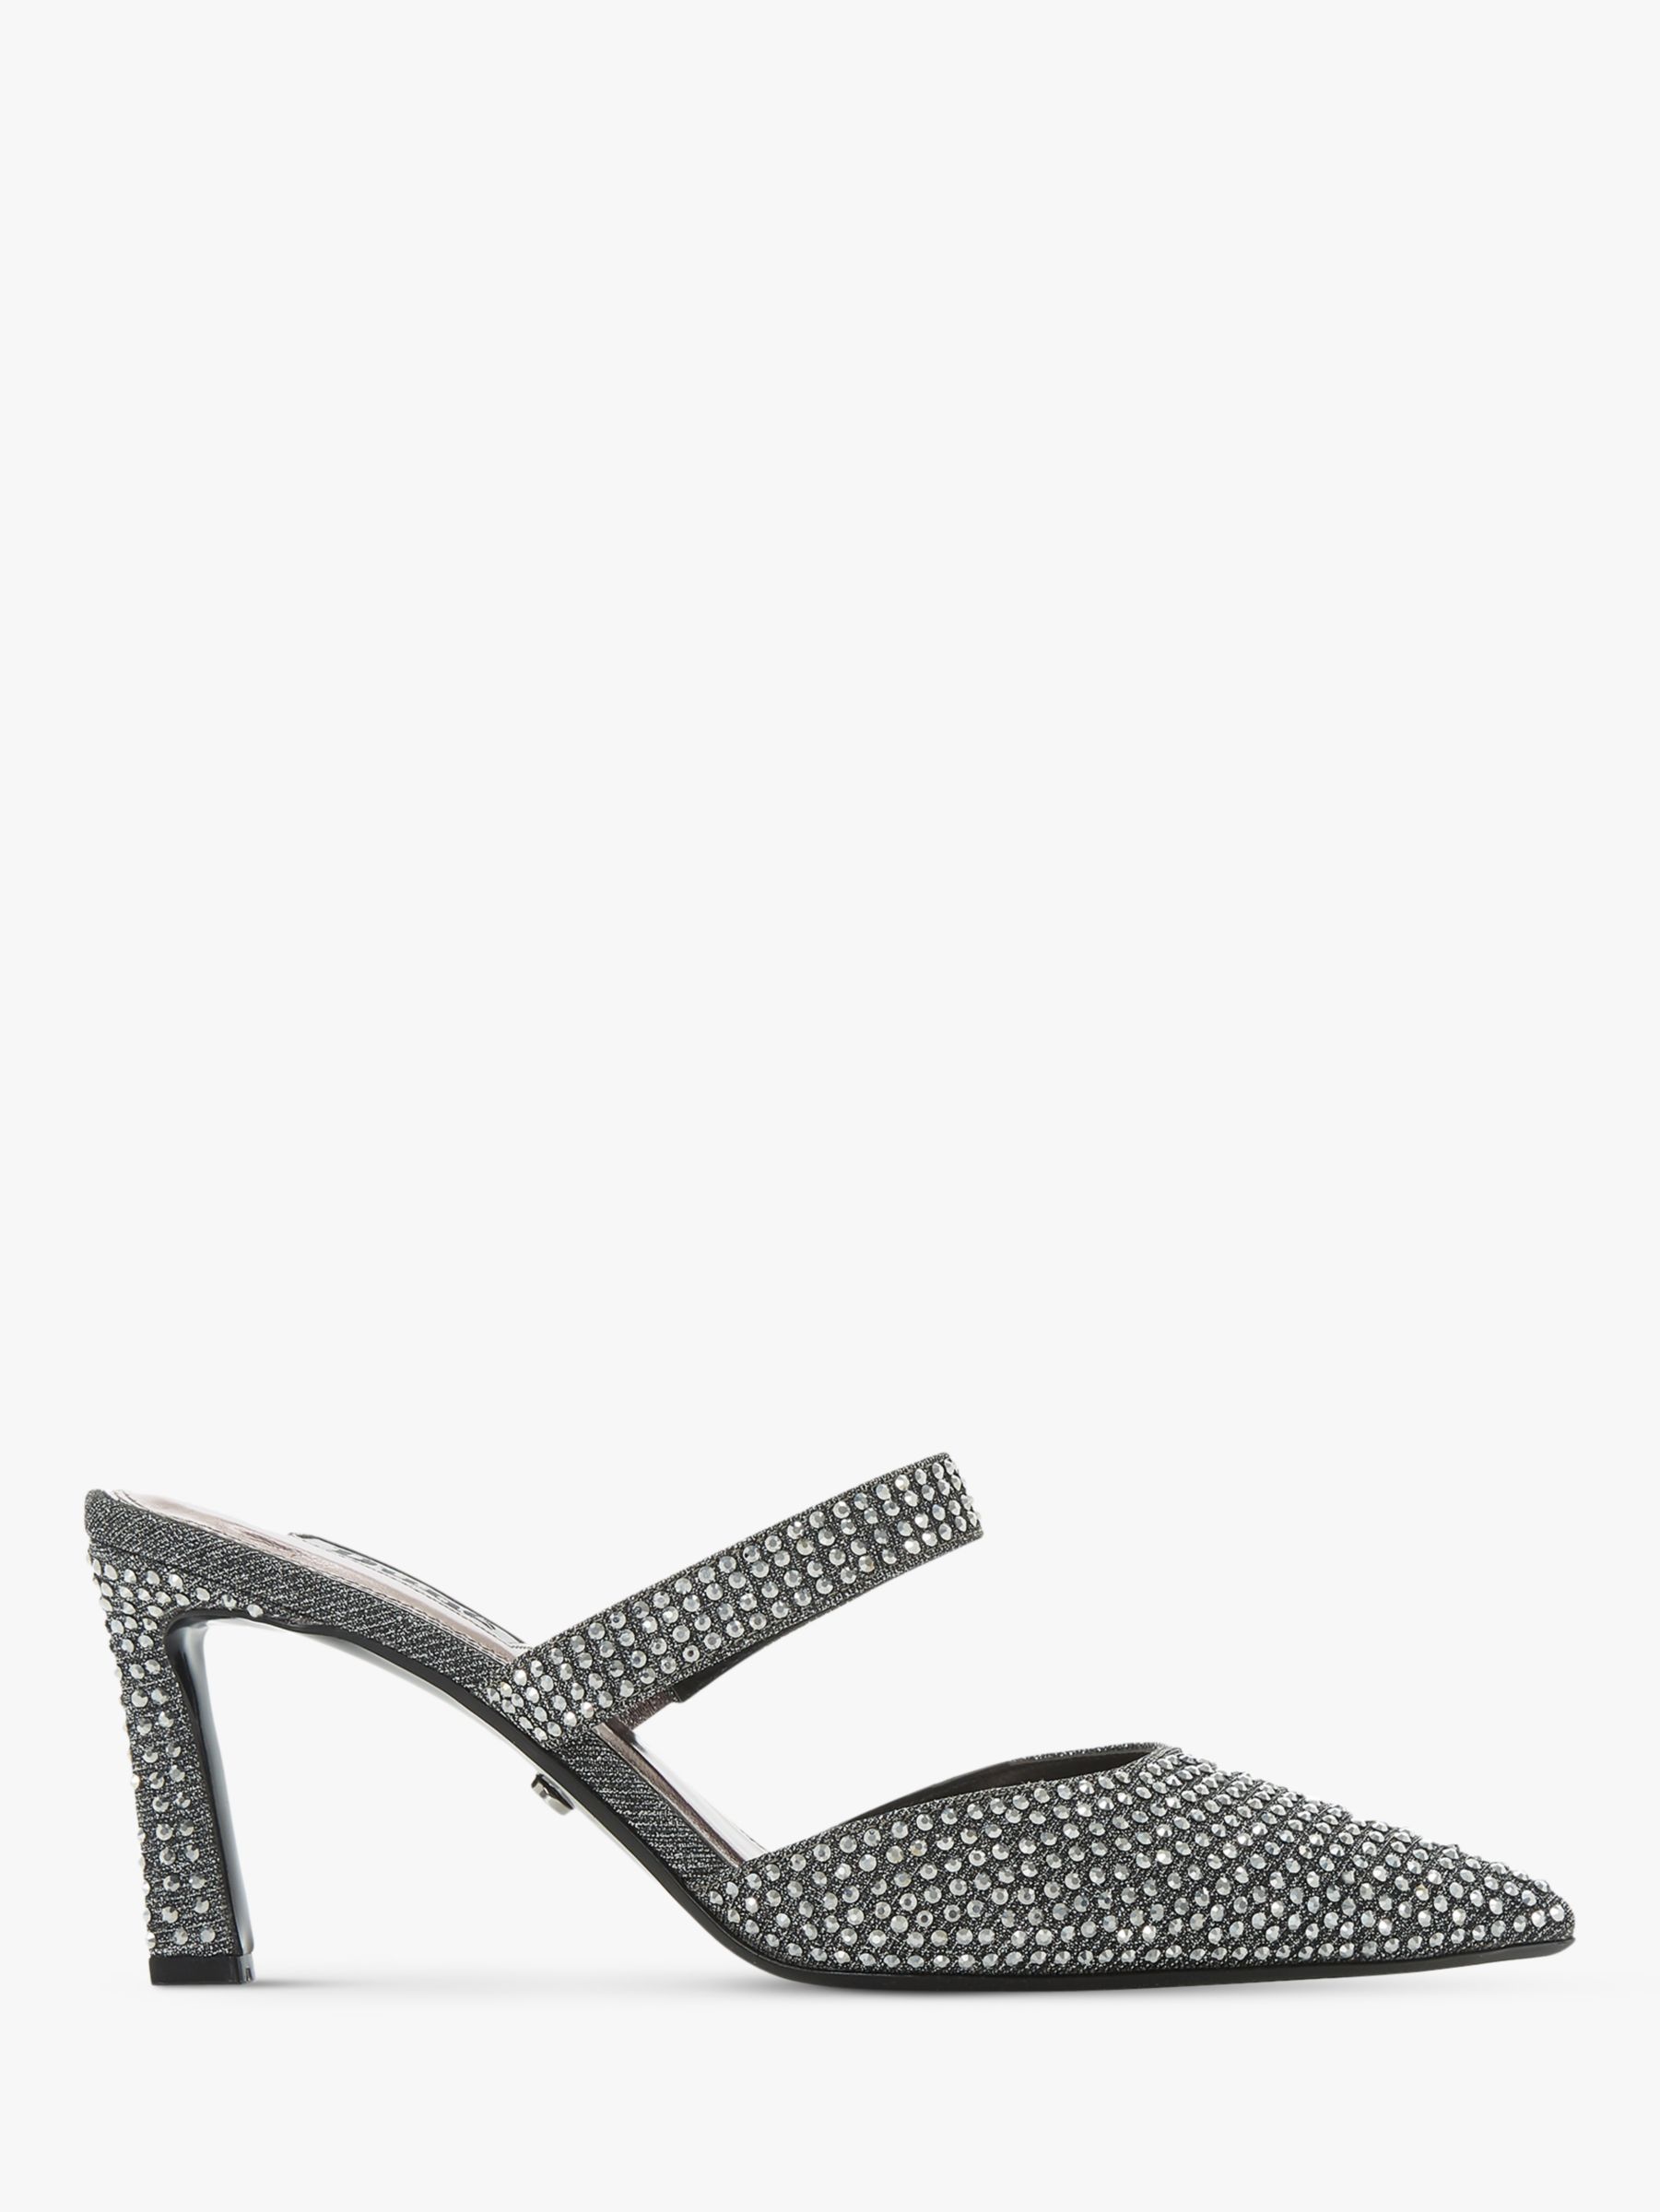 Dune Dallace Diamante Embellished Mule Kitten Heel Shoes, Grey, 3